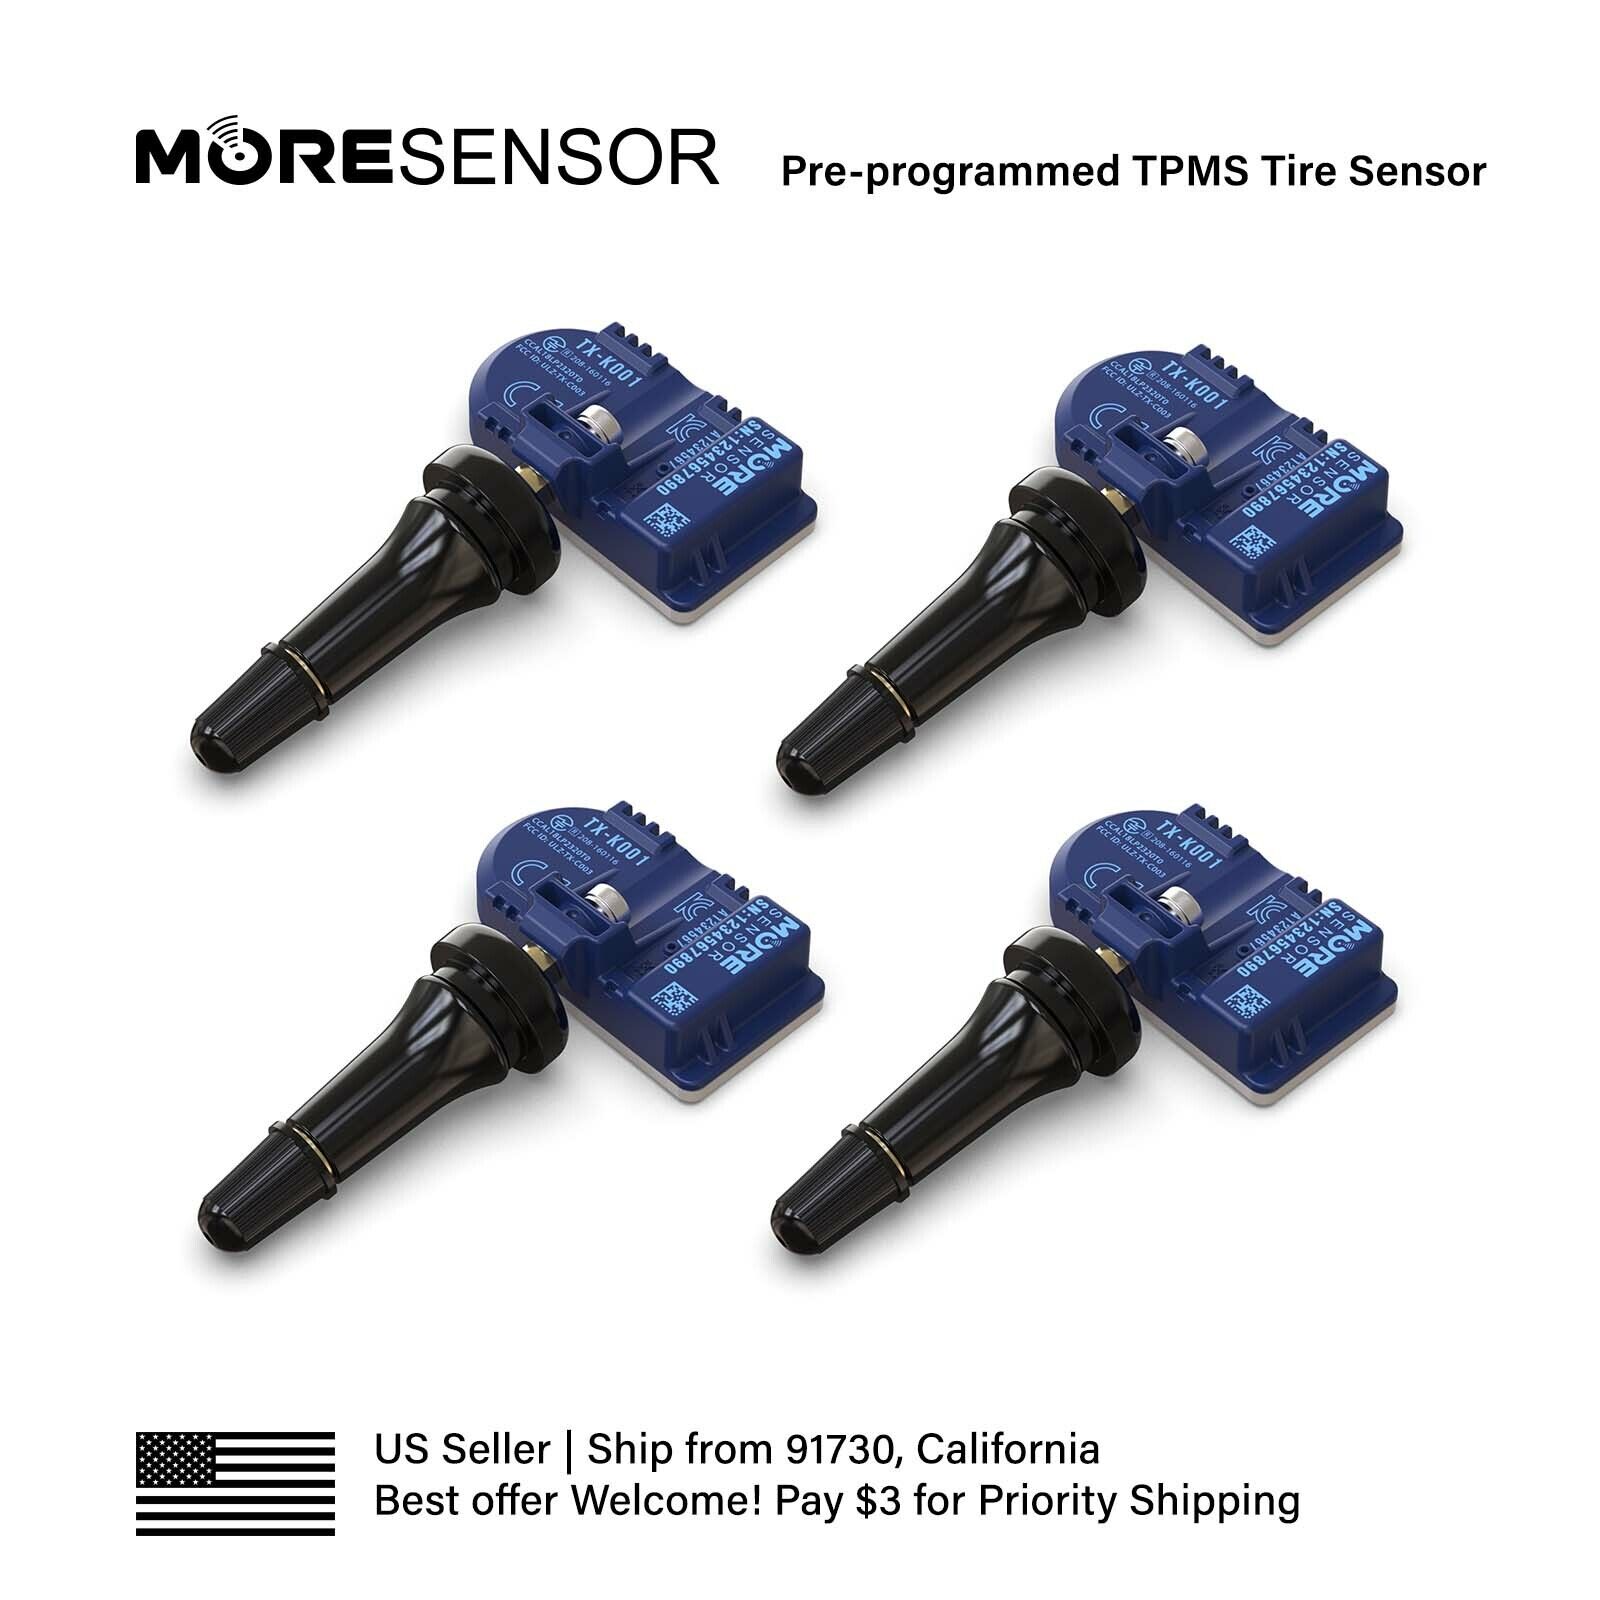 4PC 315MHz MORESENSOR TPMS Snap-in Tire Sensor for CL/E/S/SL/SLR Class Alpina B7